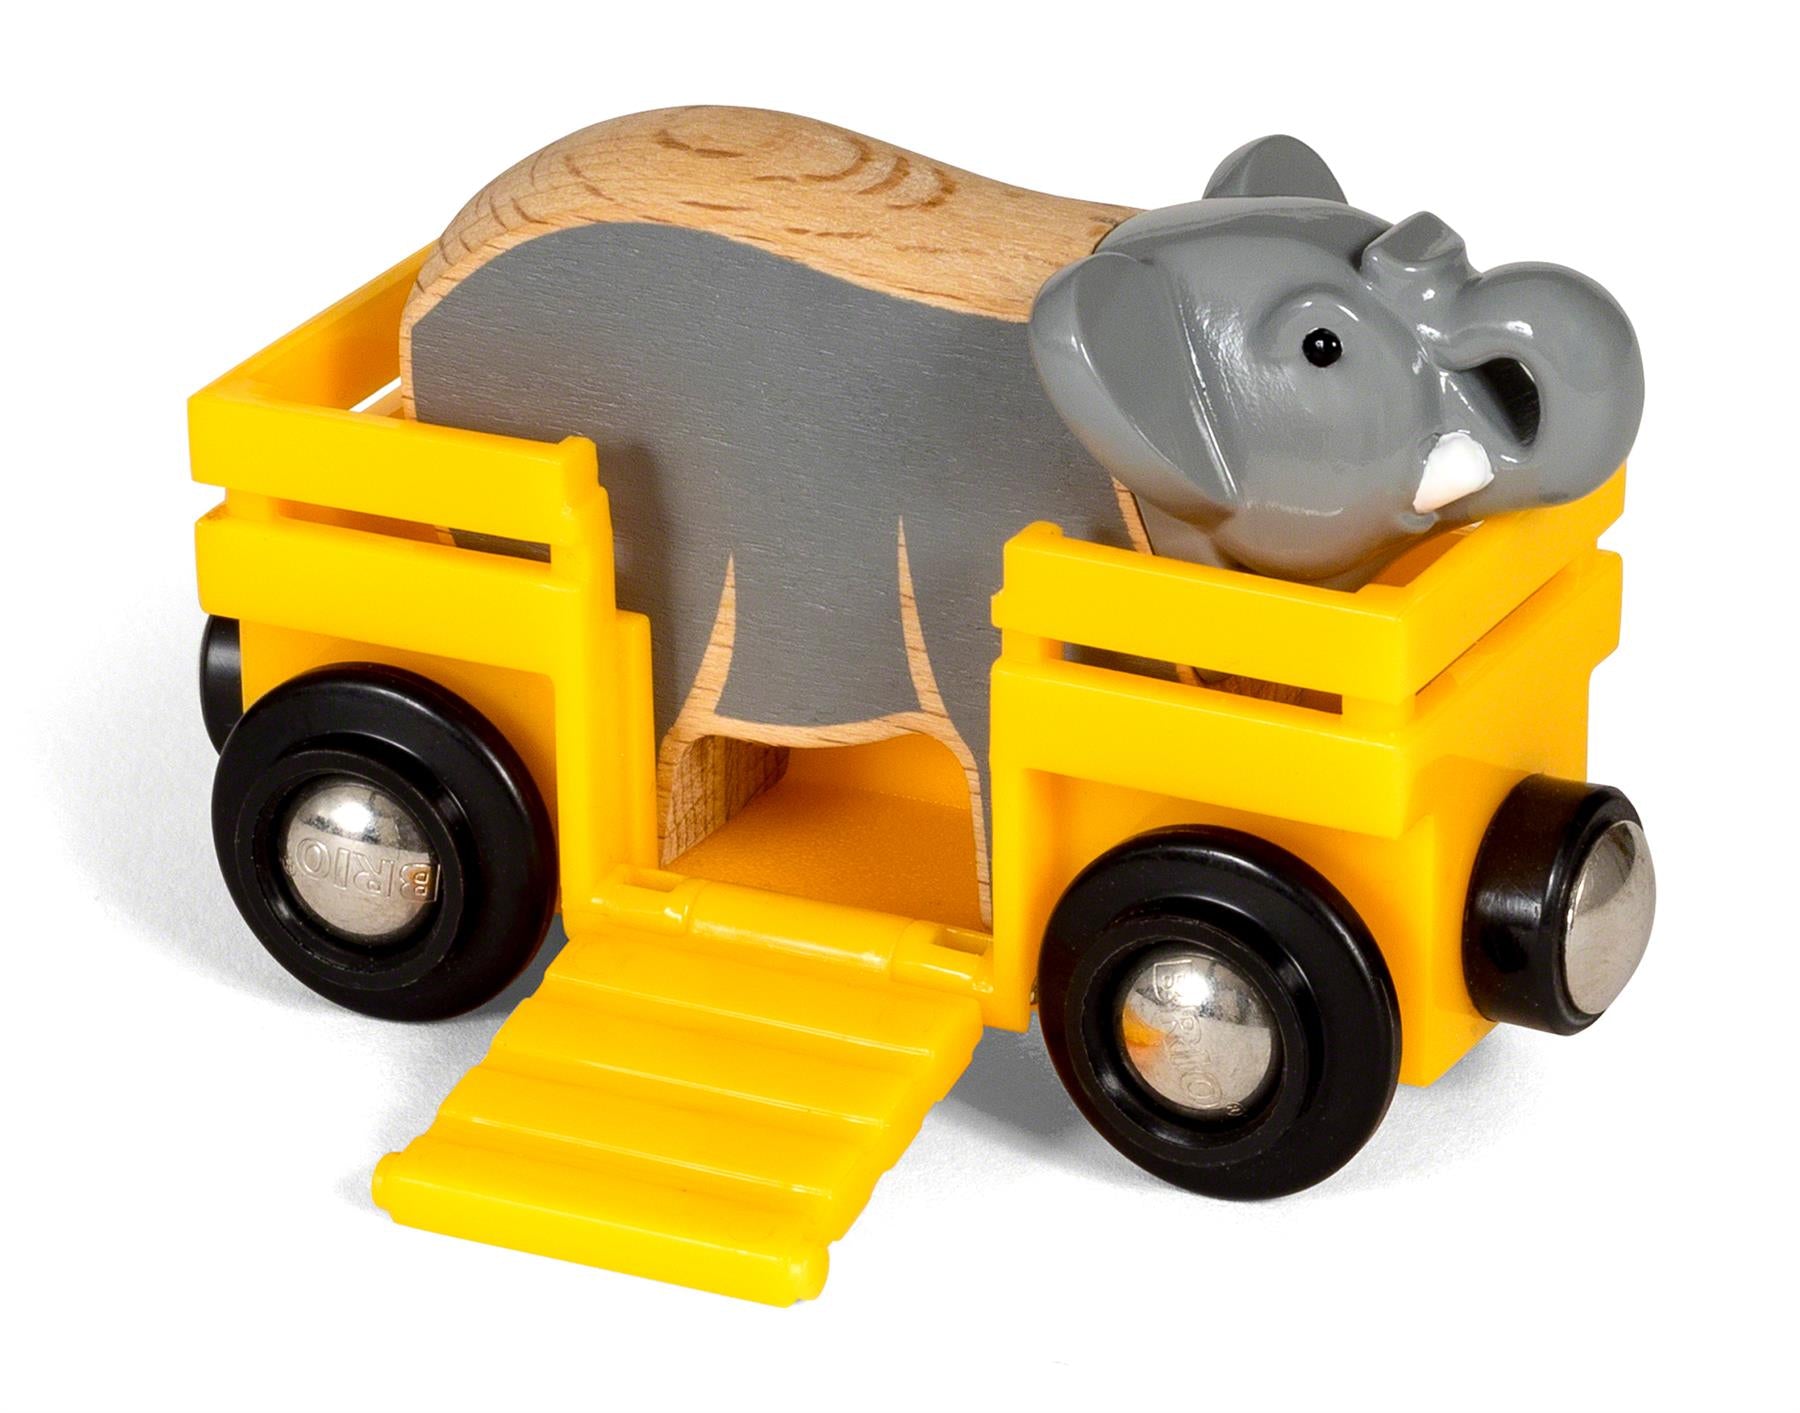 Brio World 33969 Elephant and Wagon